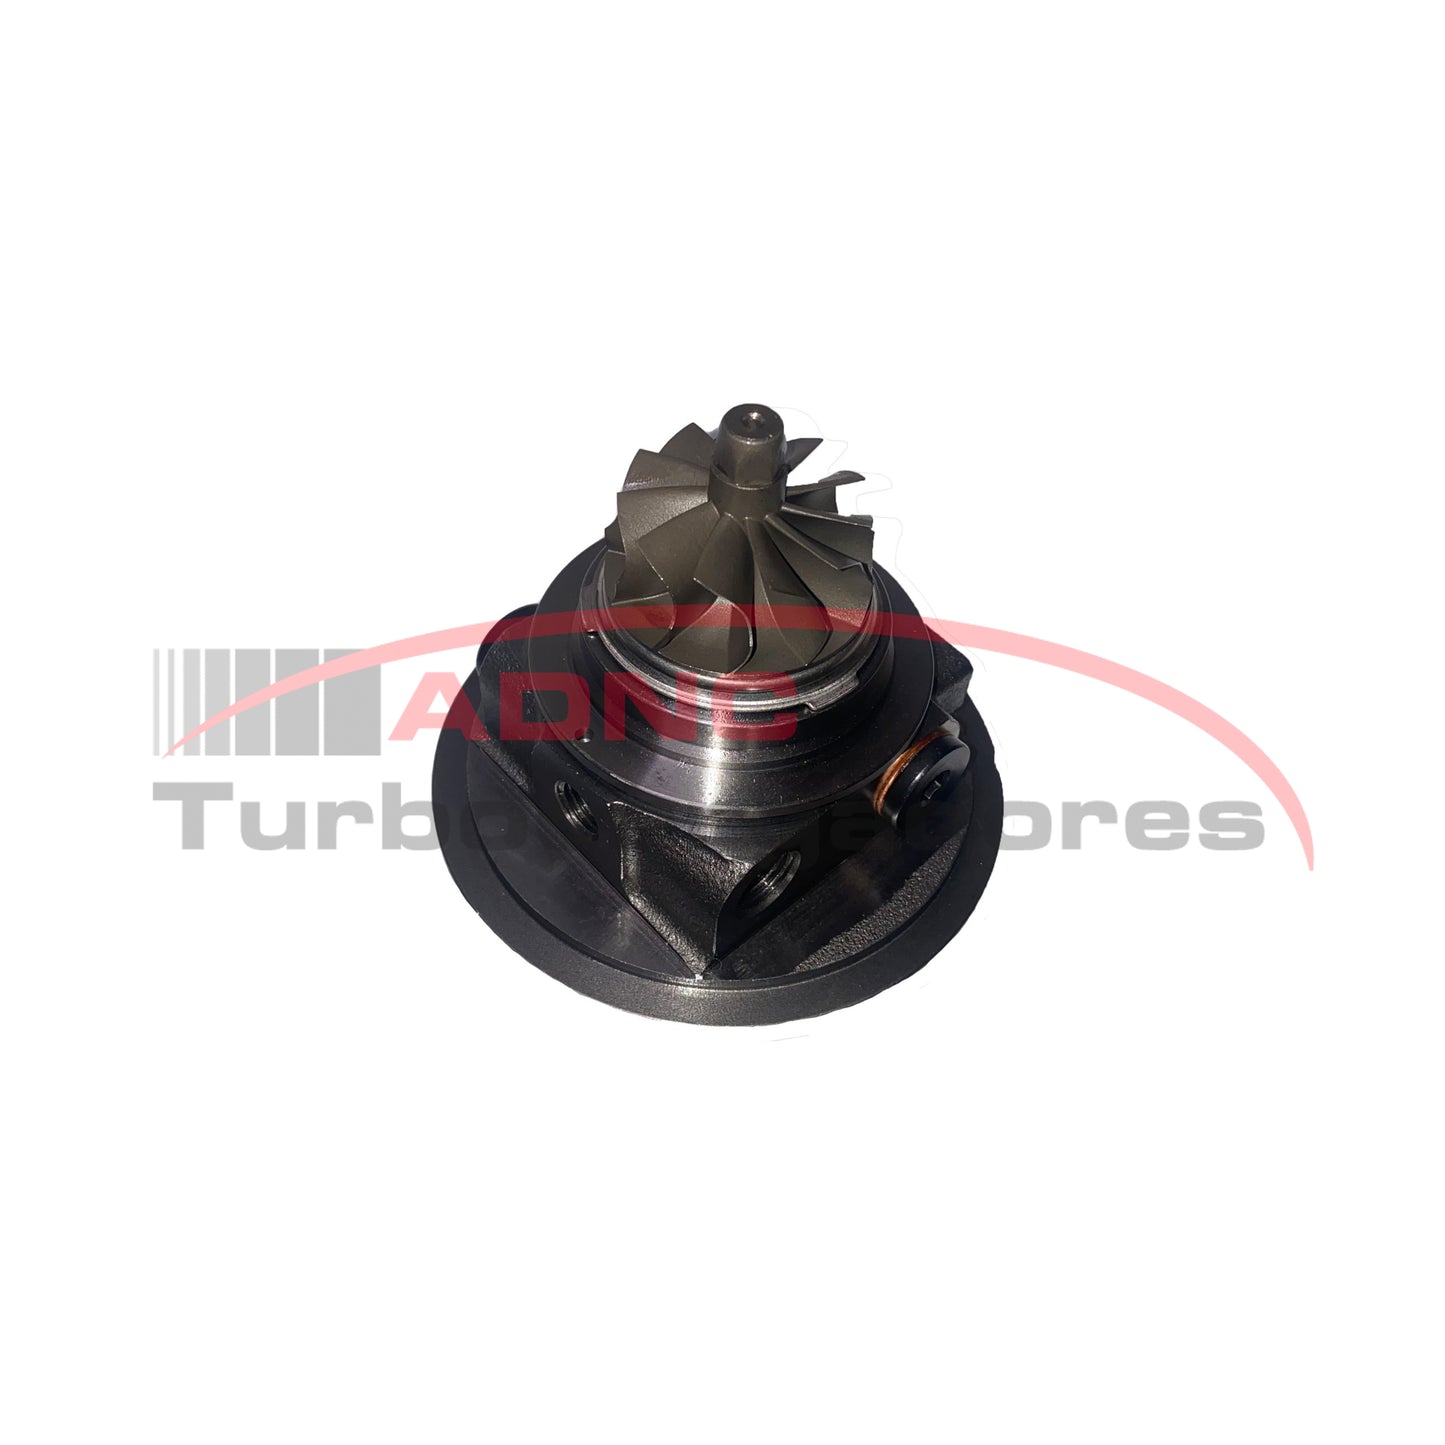 Cartridge Turbo: K03-0105 - Aplicación: Volkswagen Passat V6, Audi 2.0